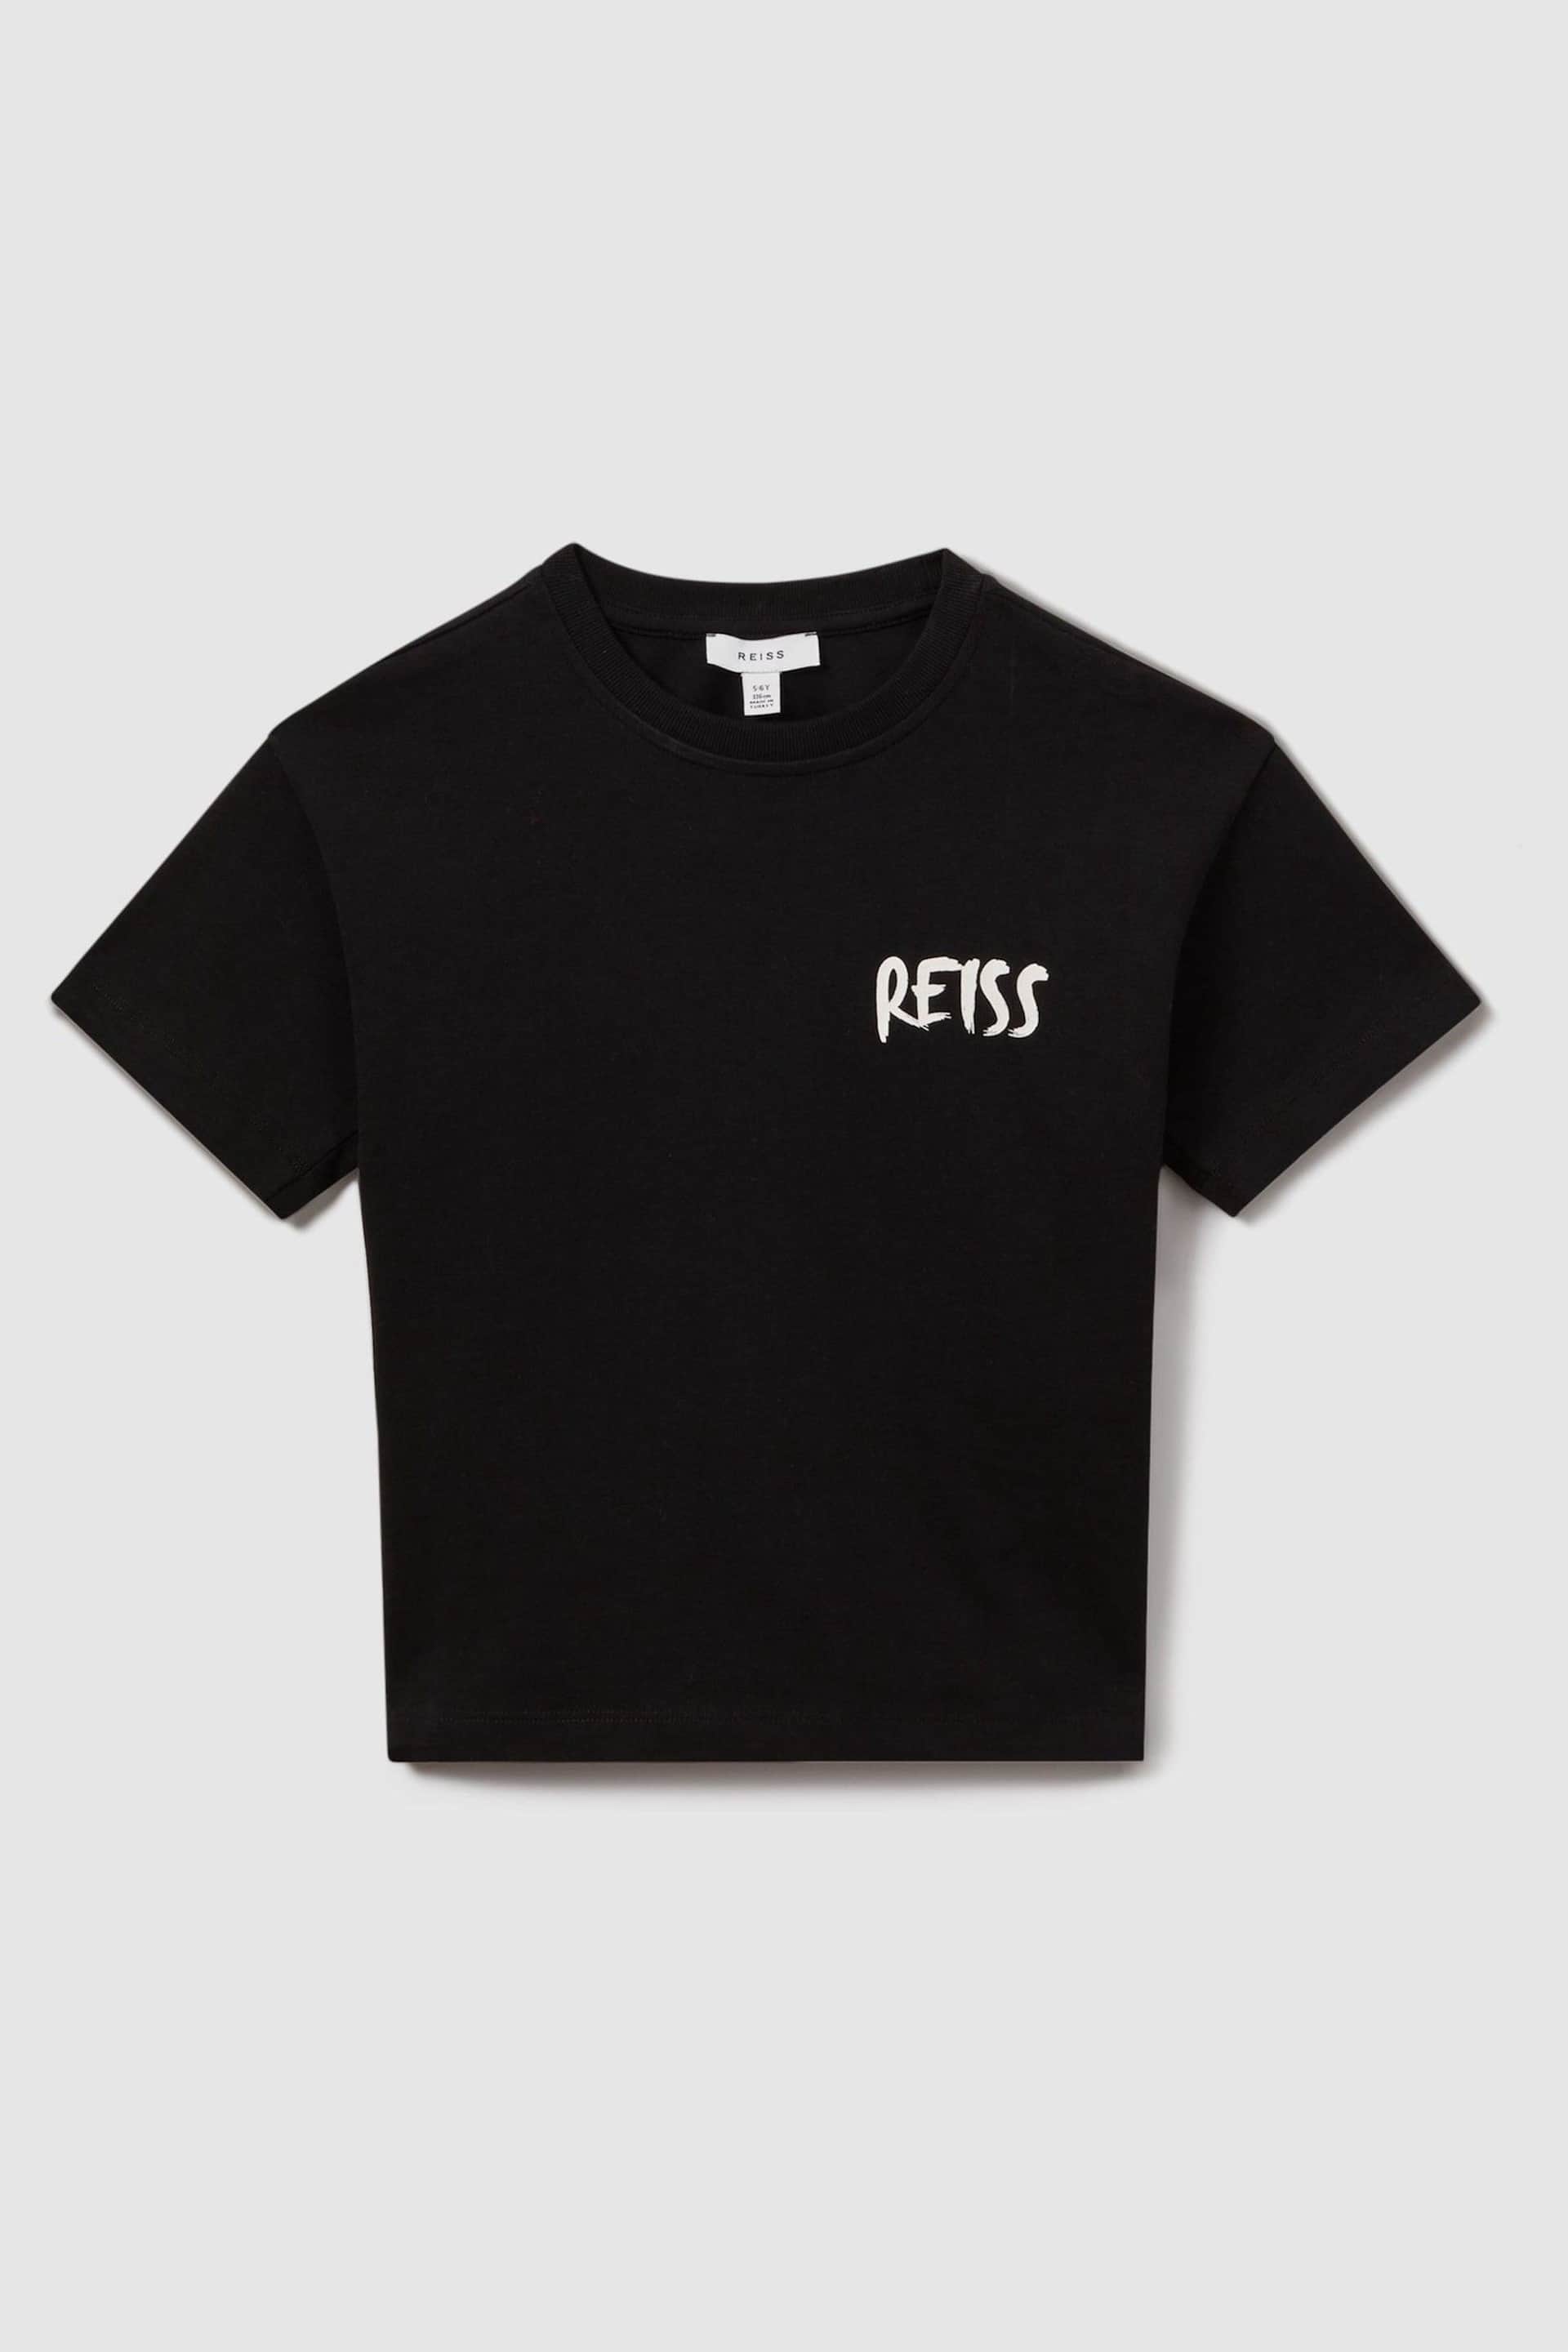 Reiss Washed Black Abbott Teen Cotton Motif T-Shirt - Image 1 of 4